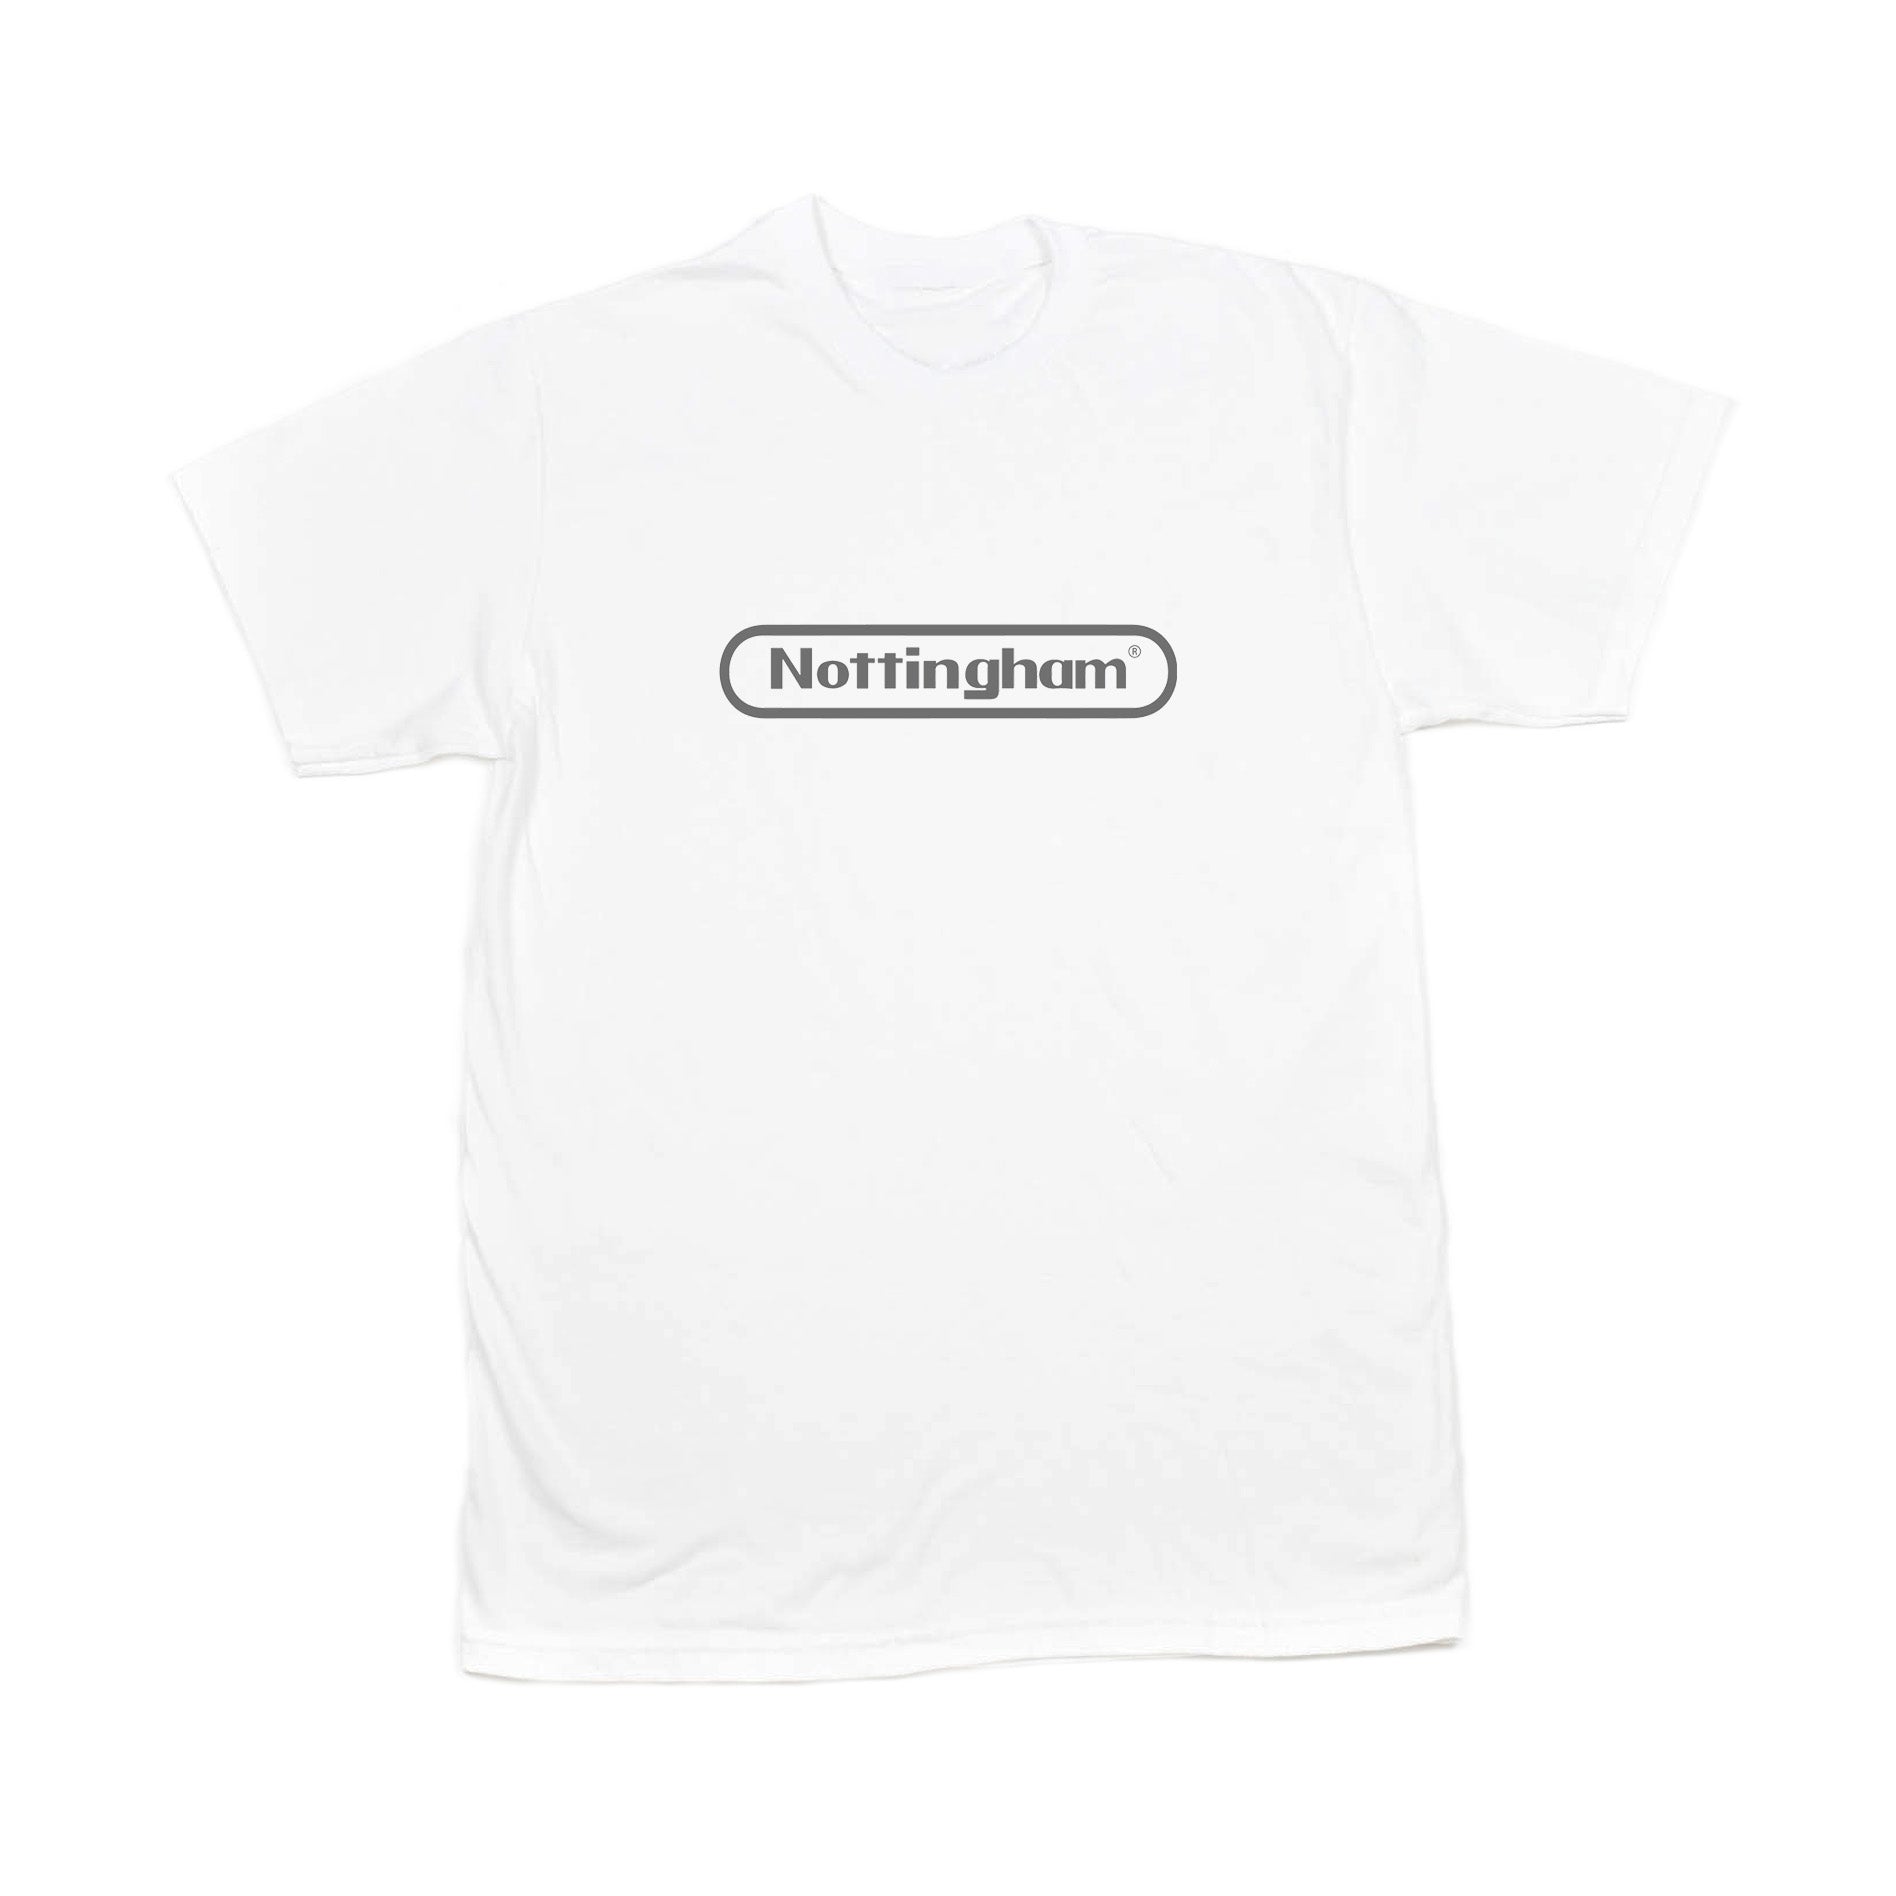 0115 Records - T-Shirts - Nottstendo T-shirt (White/Grey)